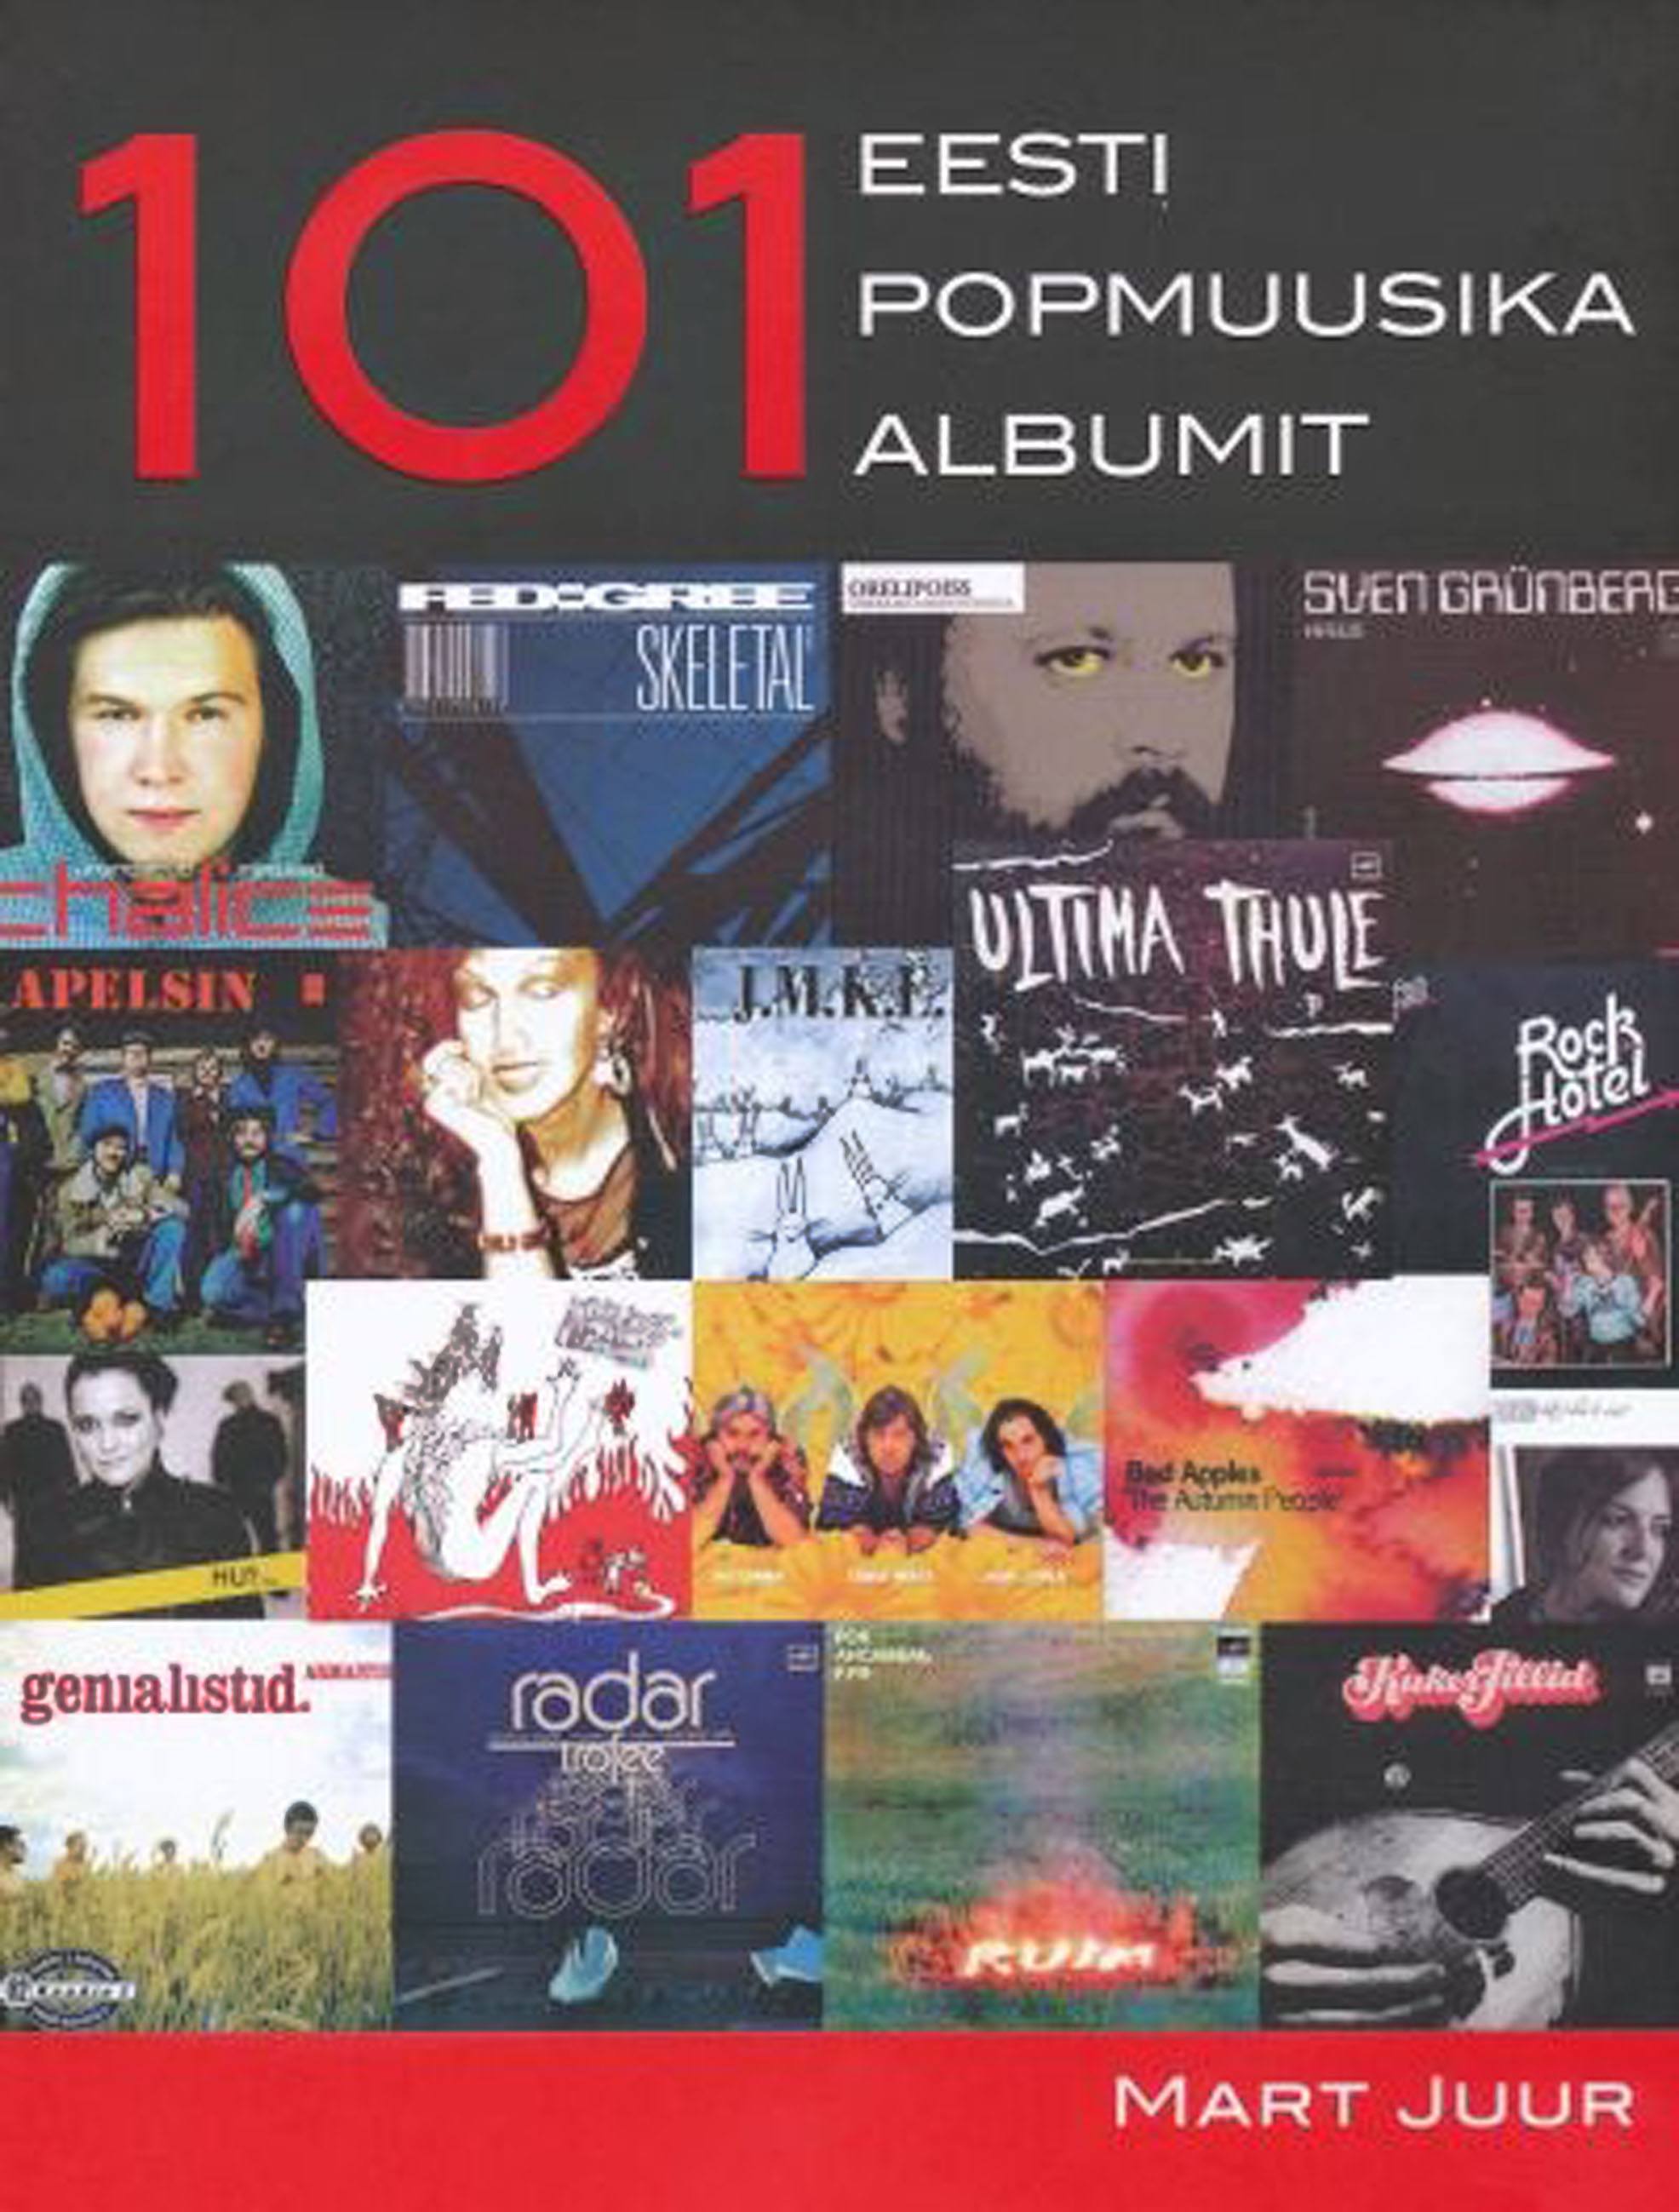 101 EESTI POPMUUSIKA ALBUMIT (на эстонском яз.) [101 АЛЬБОМ ЭСТОНСКОЙ ПОП-МУЗЫКИ]